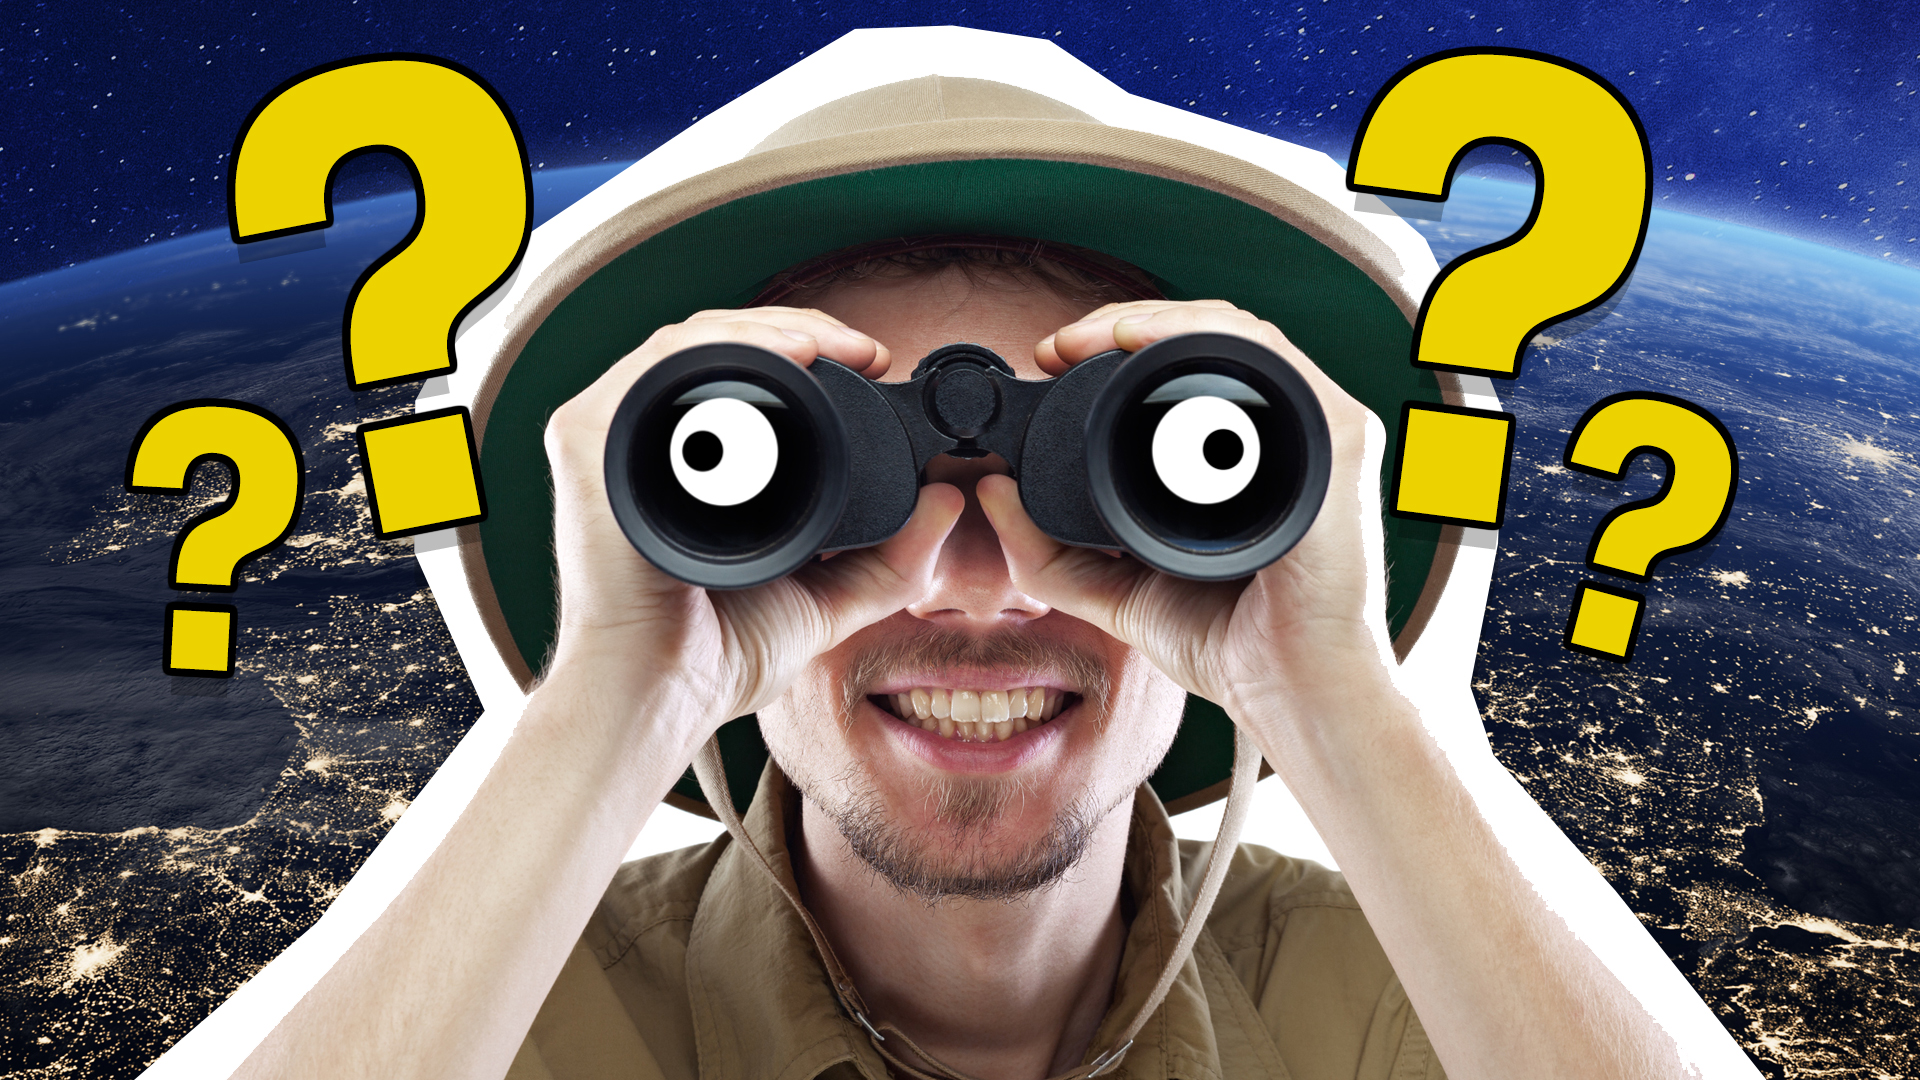 An explorer using binoculars